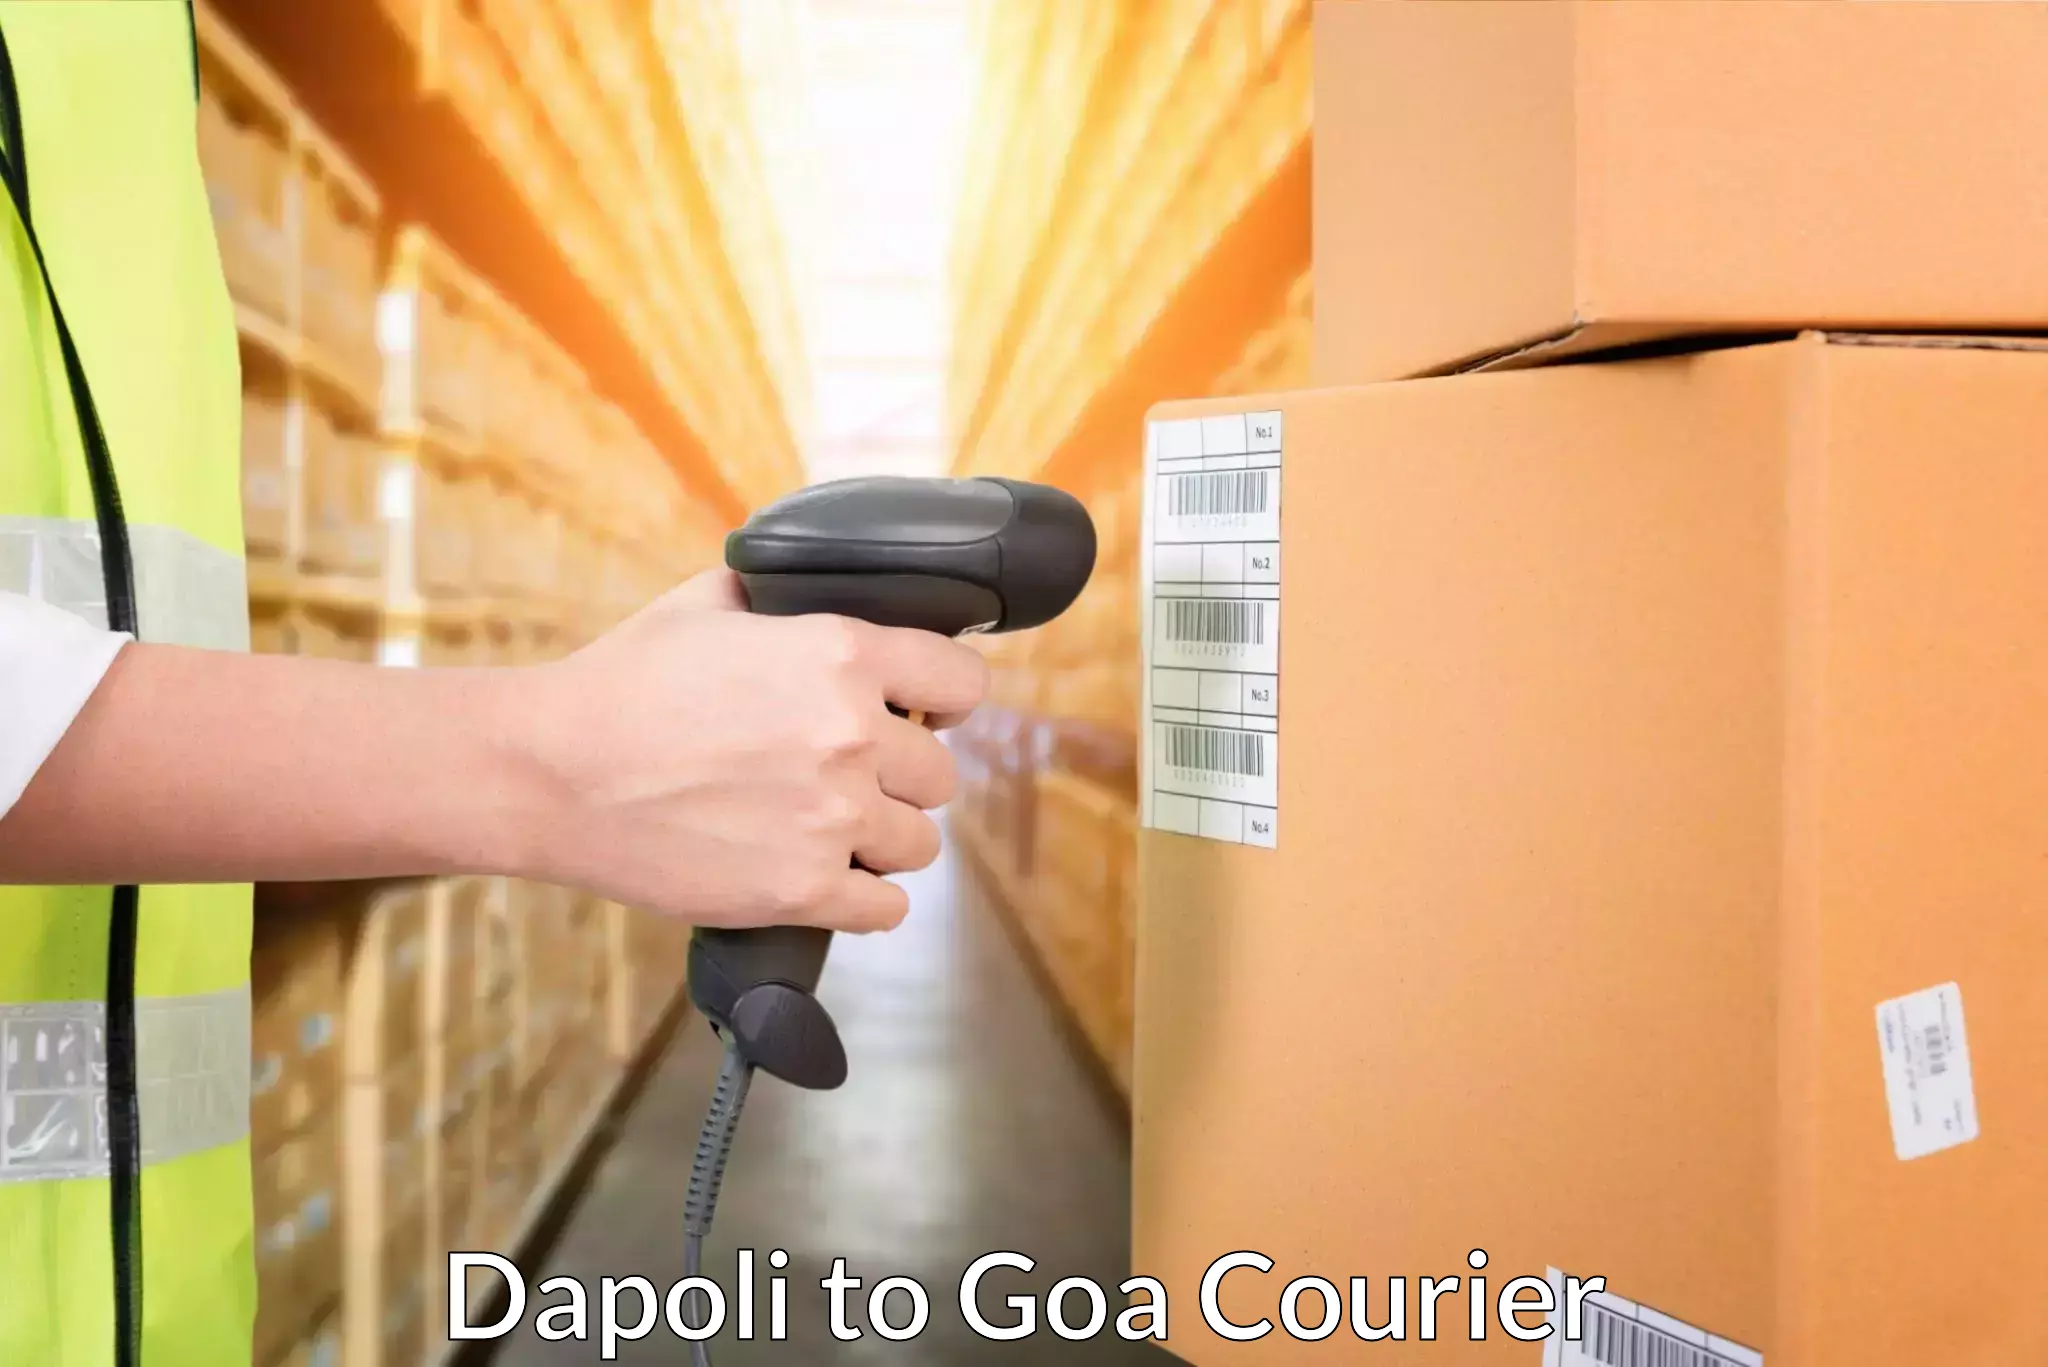 State-of-the-art courier technology Dapoli to Vasco da Gama